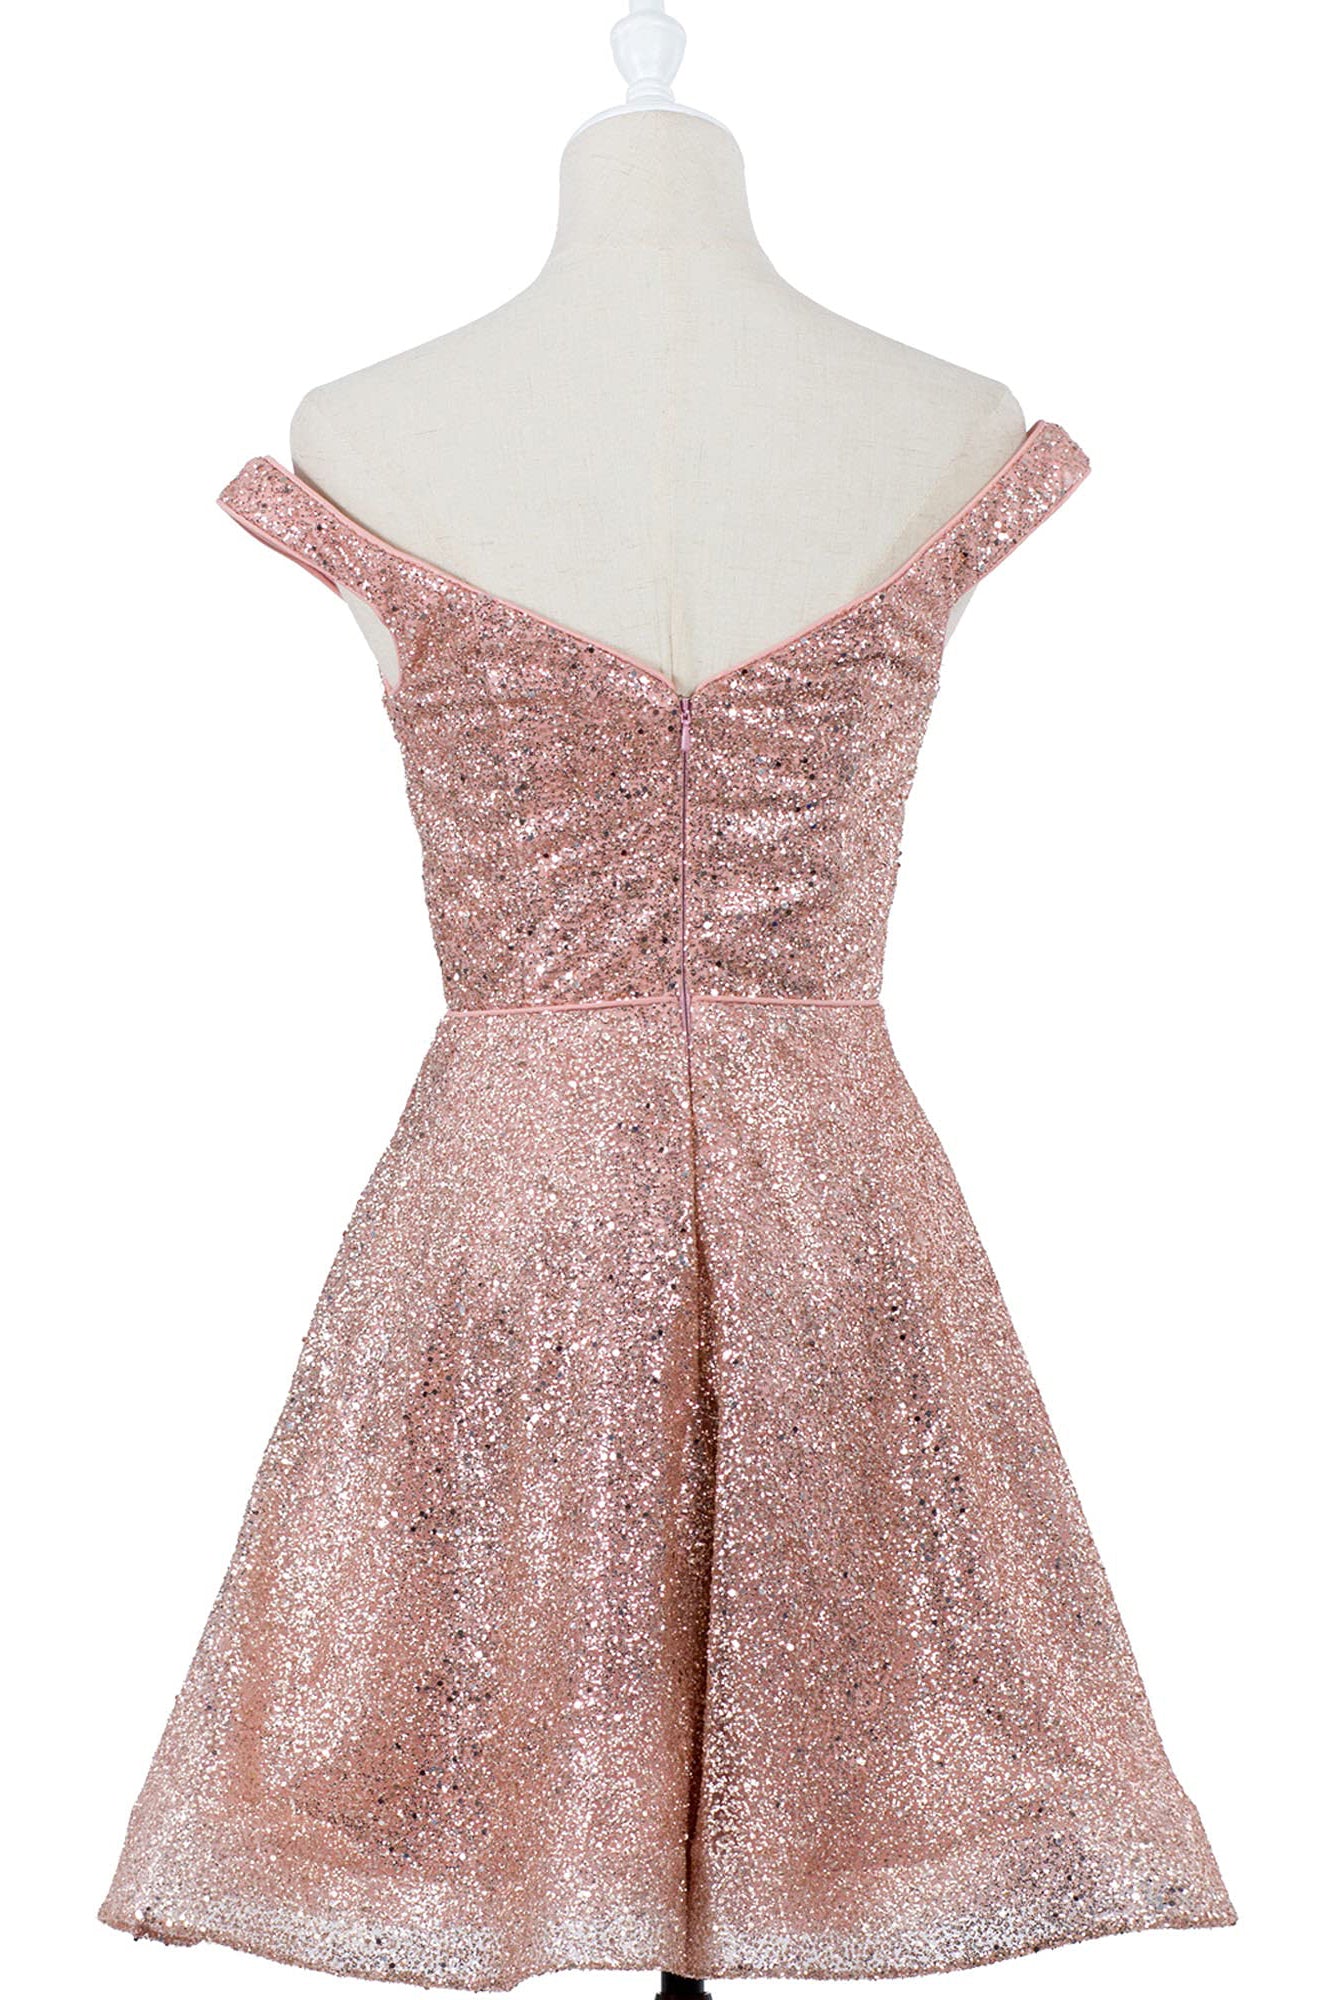 Charming Short A-Line V-Neck Glitter Homecoming Dress